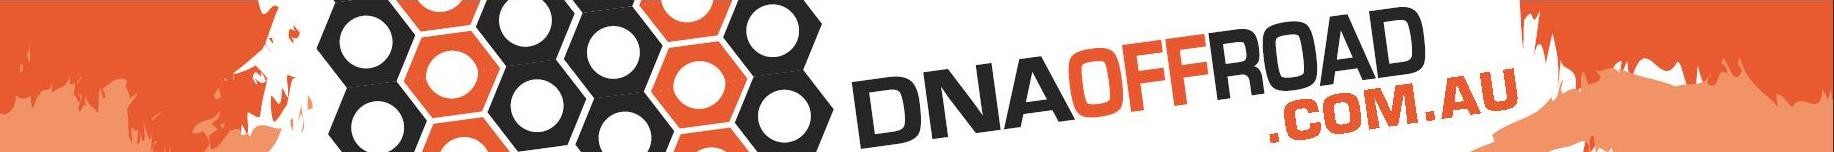 DNA windscreeen sticker 850x70